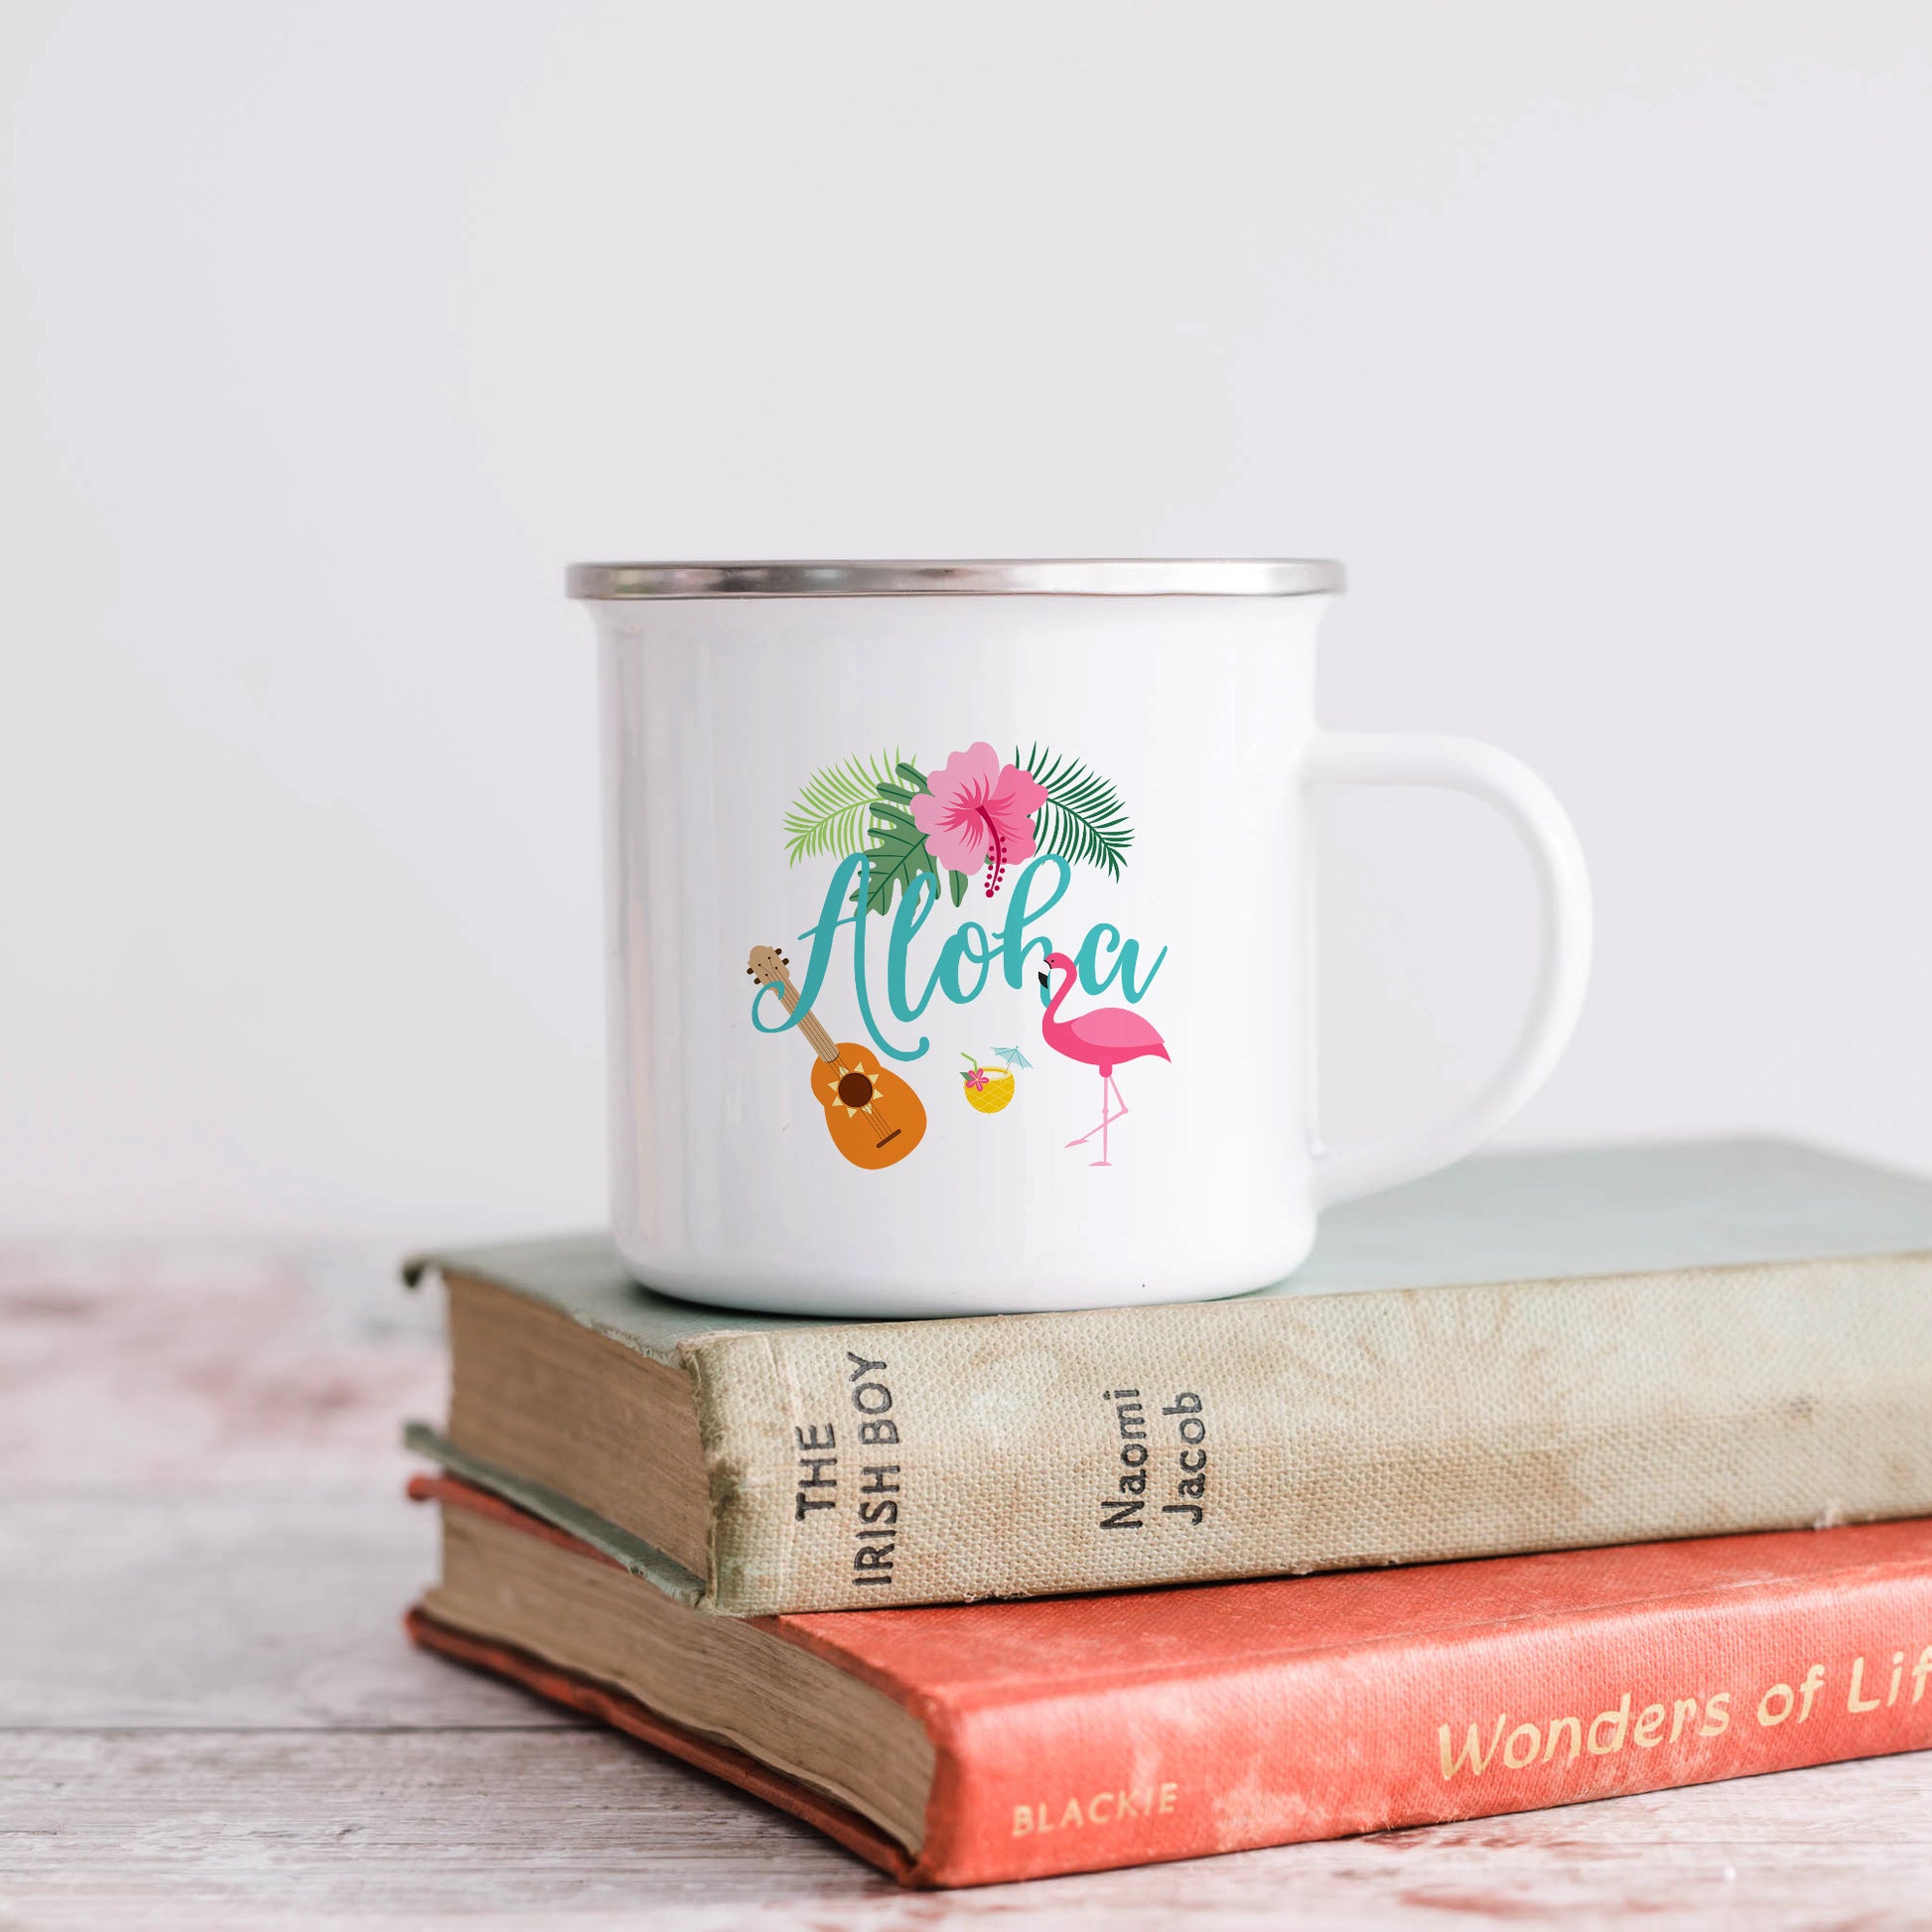 Aloha with flamingo | Enamel mug-Enamel mug-Adnil Creations